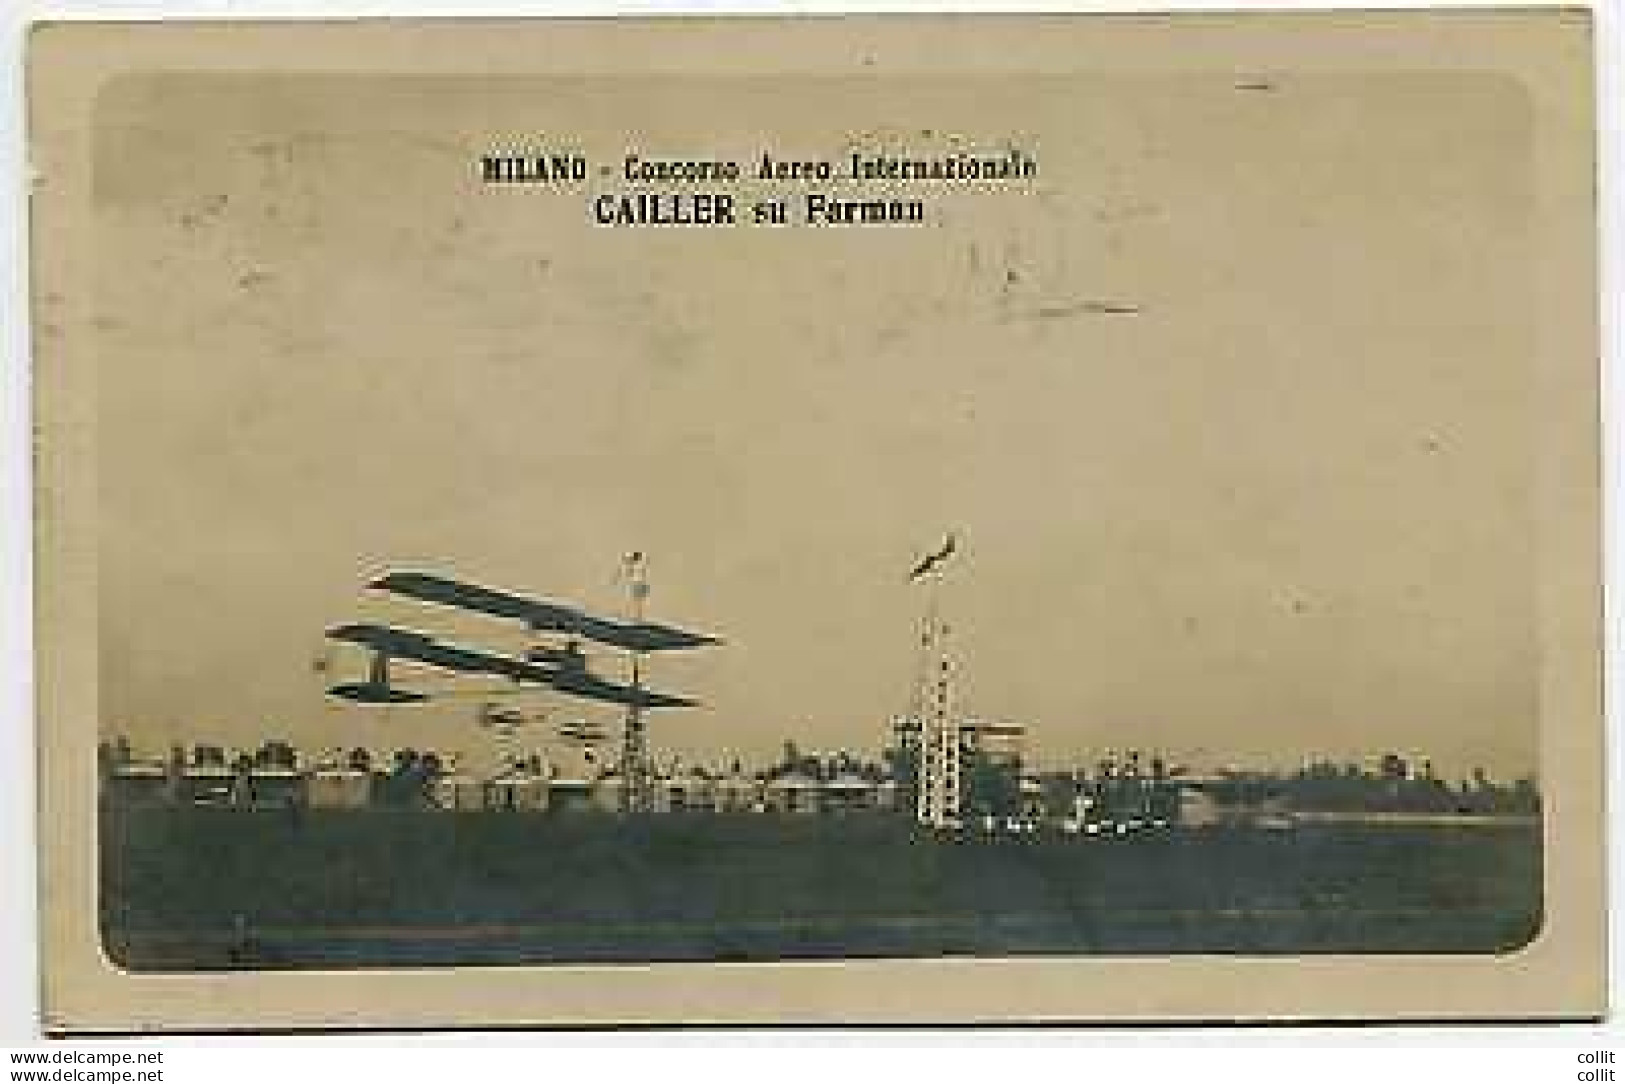 1910 Milano Concorso Aereo Internazionale - Cartolina Fotografica - Marcofilía (Aviones)